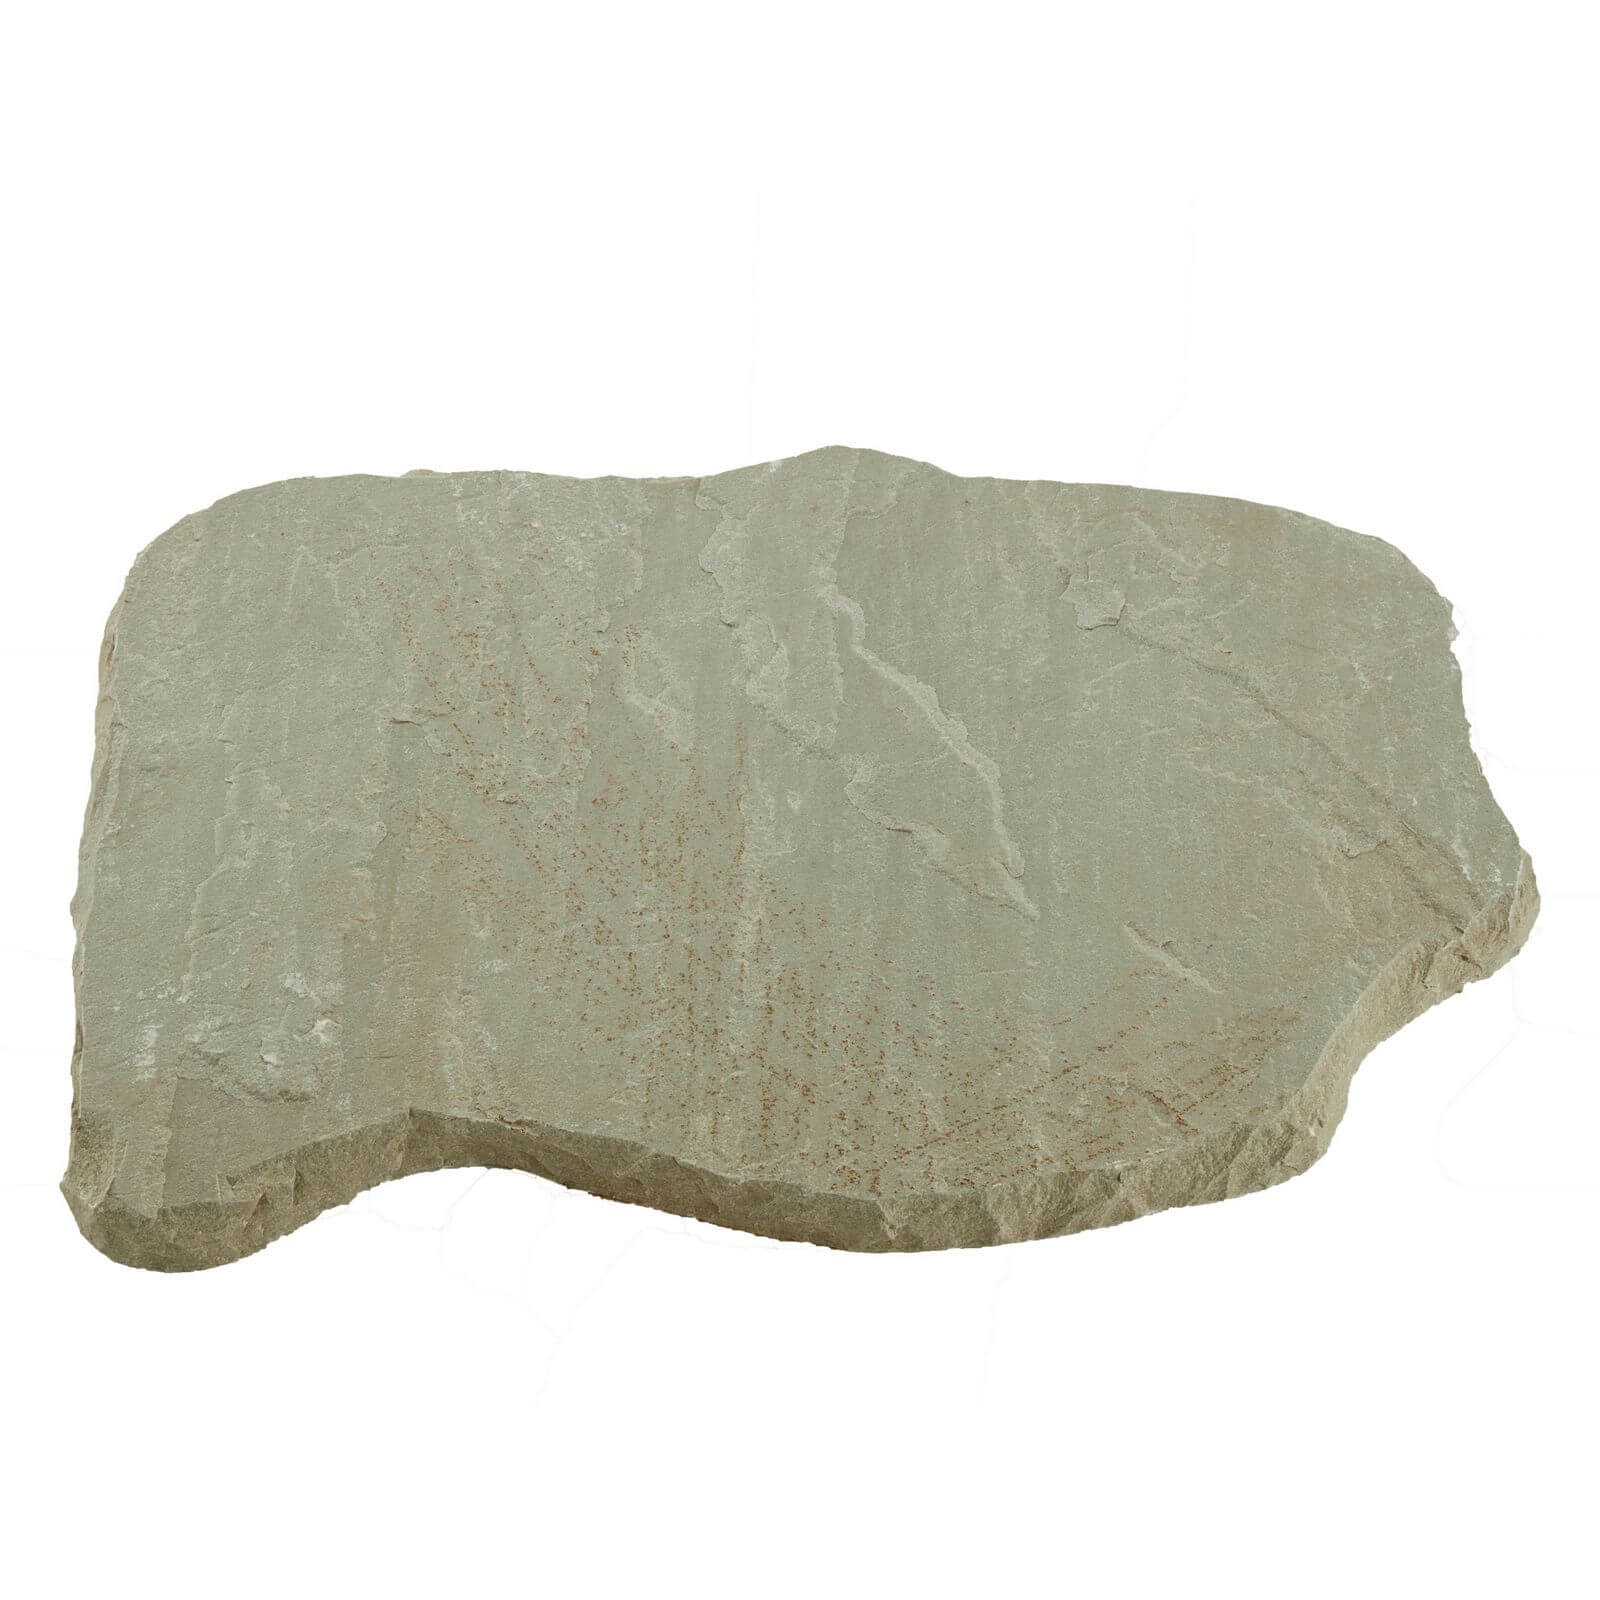 Photo of Stylish Stone Natural Random Stepping Stone 400x300mm - Lakefell